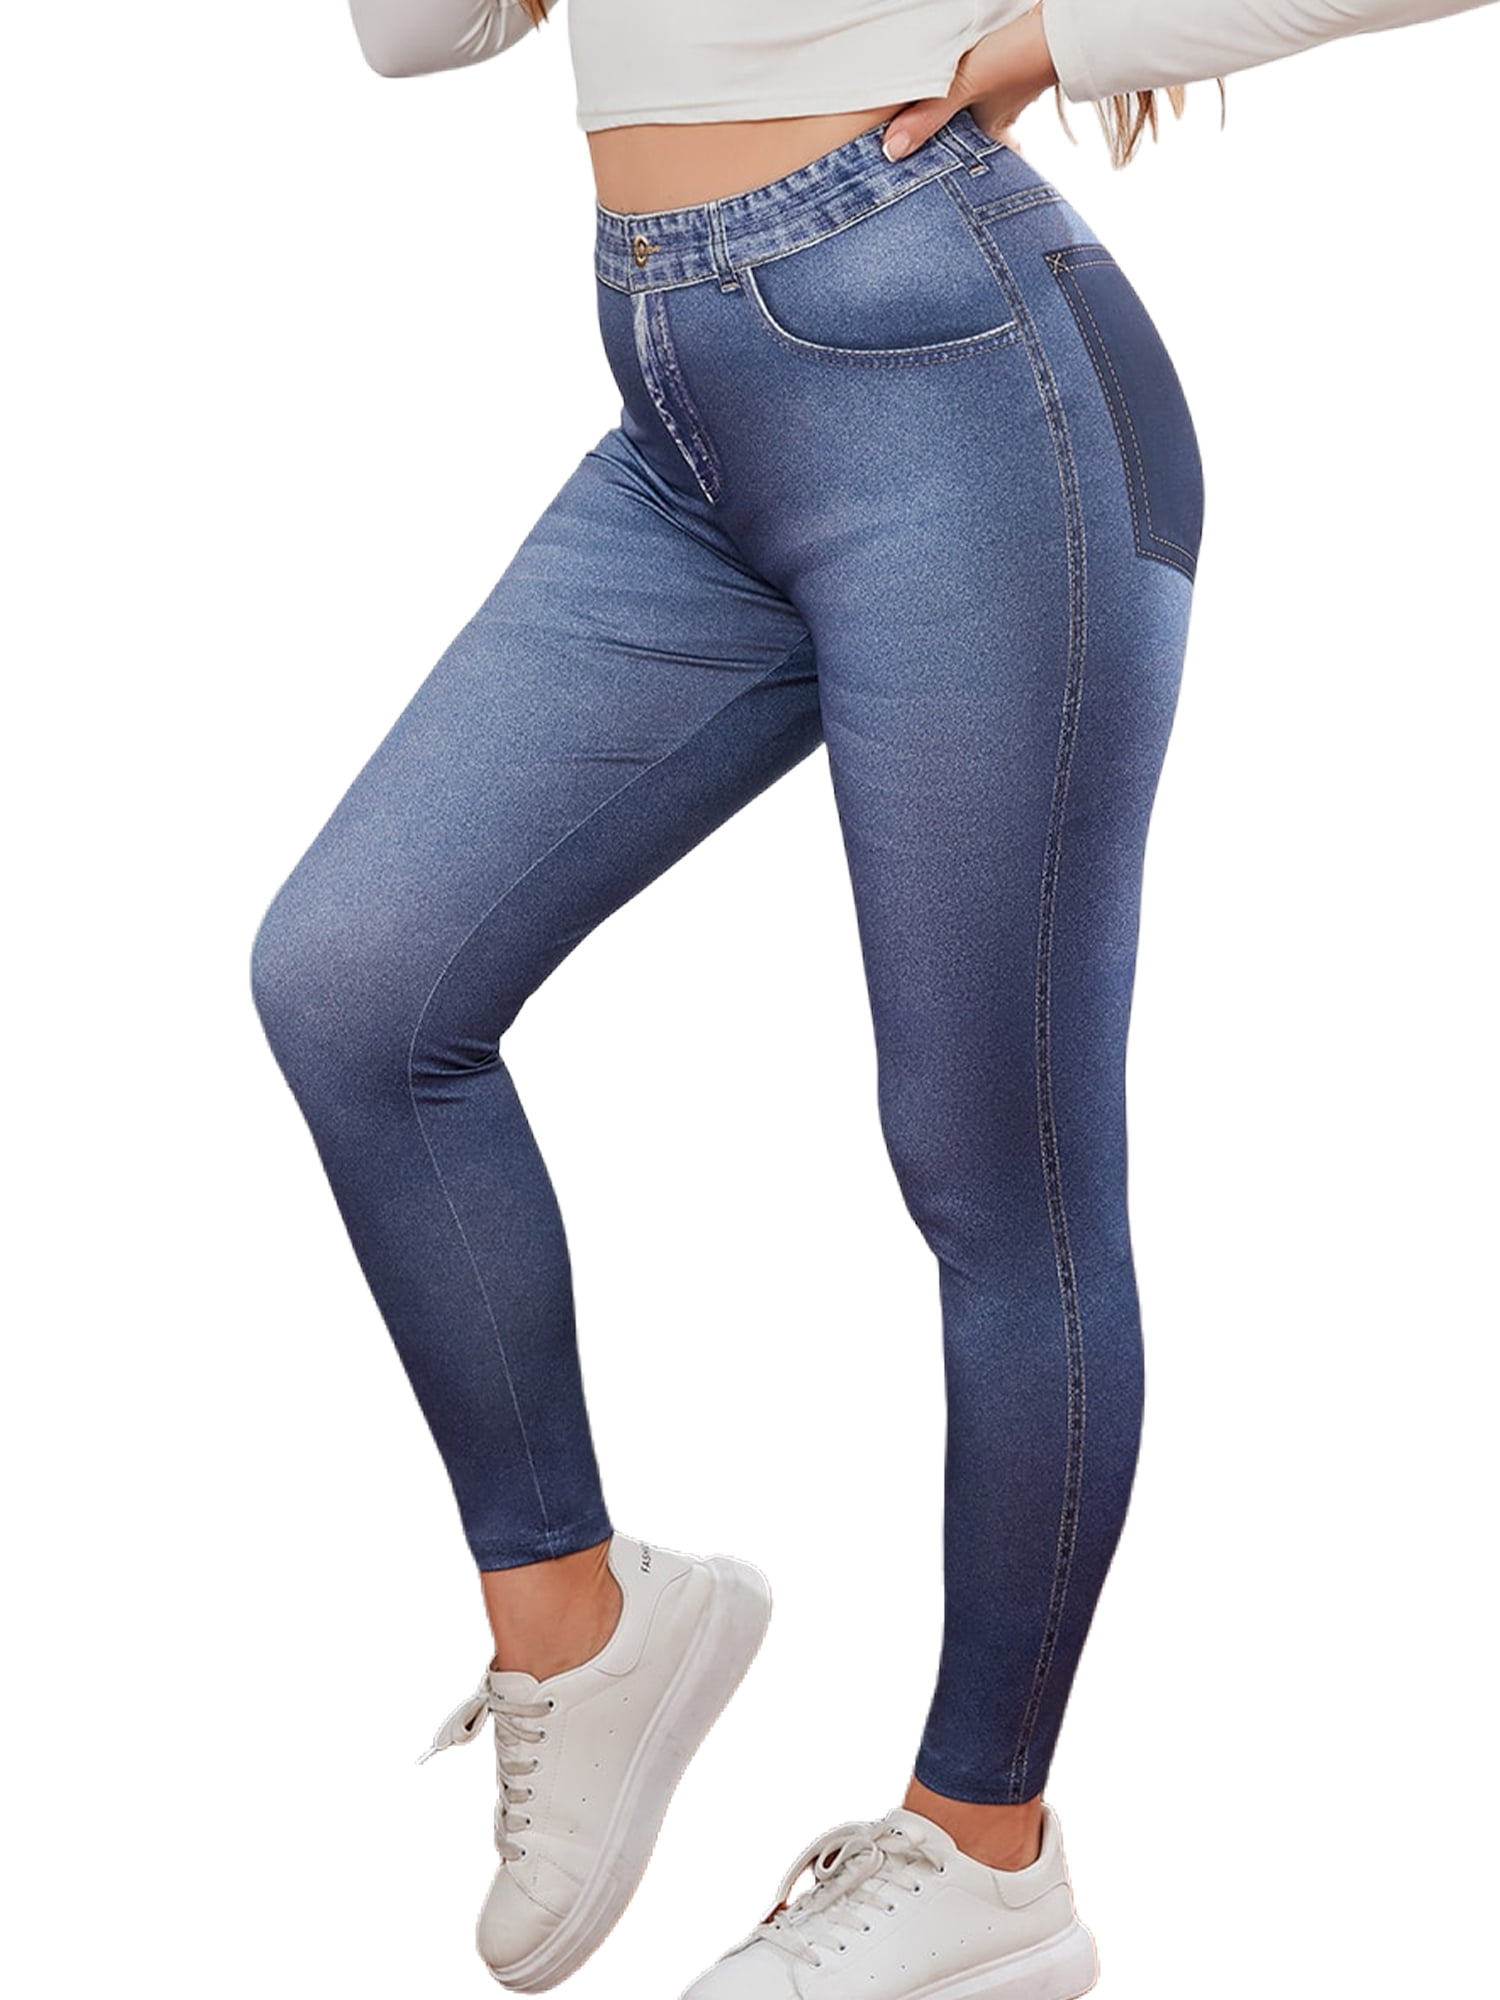 Frontwalk Women's Plus Size Jean Look Leggings High Waist Slim Skinny  Jeggings with Pockets Seamless Fake Denim Pants Blue 4XL 